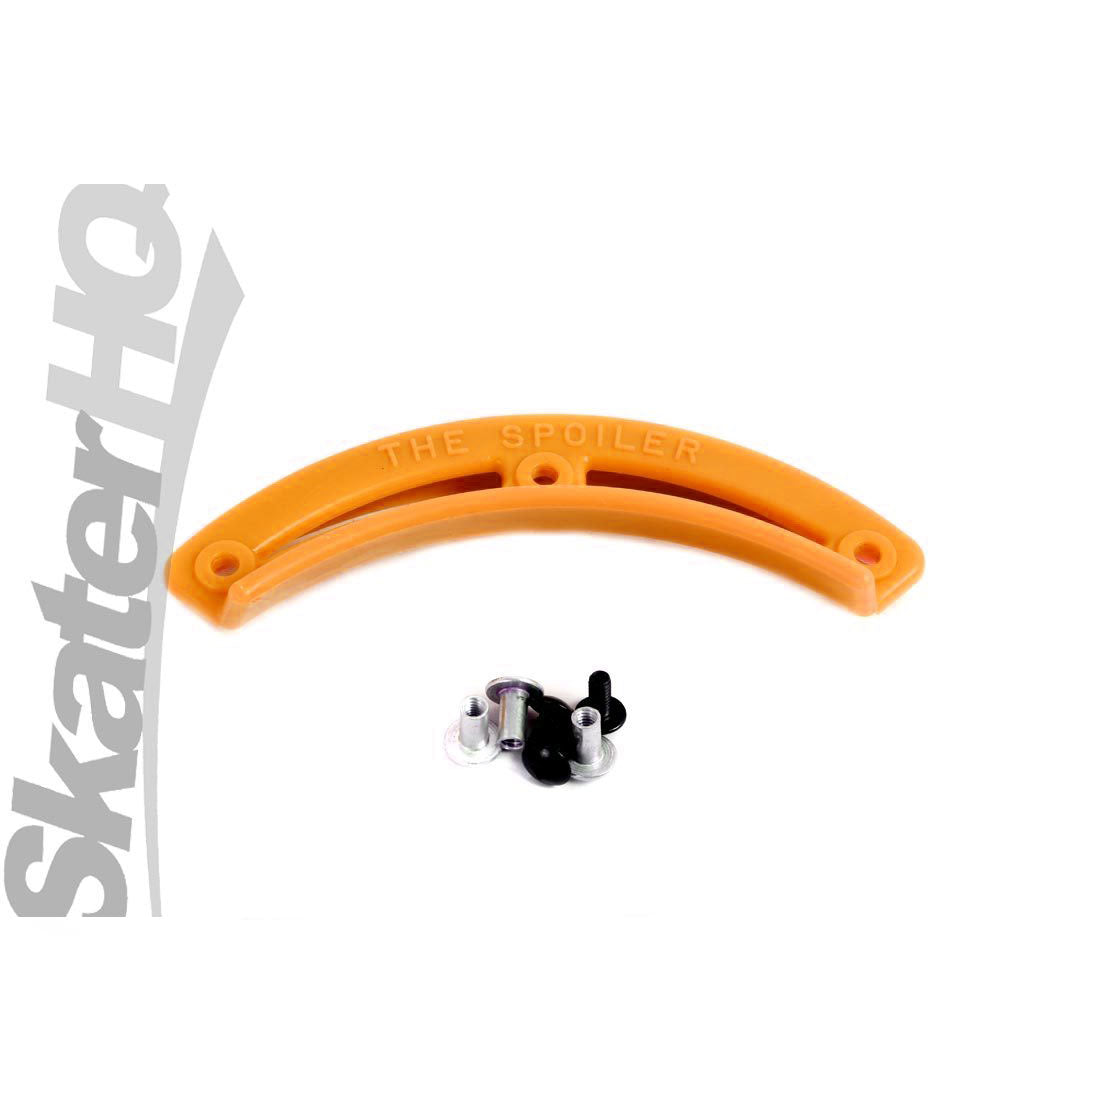 Psycho Spoiler Nose Guard 5.75 - Orange Skateboard Hardware and Parts